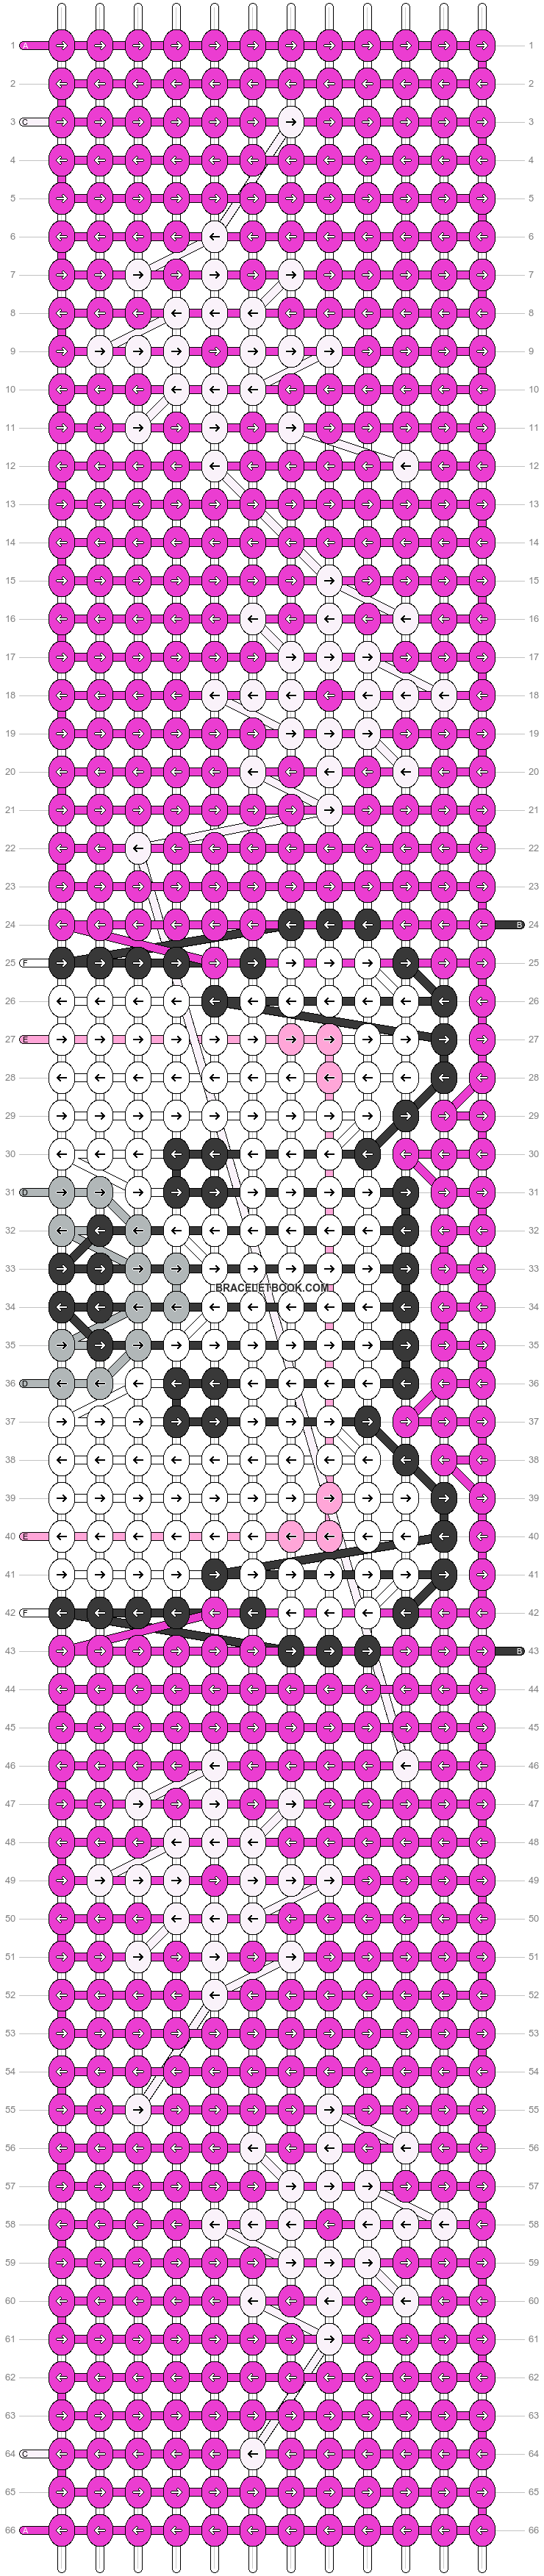 Alpha pattern #62564 variation #173237 pattern